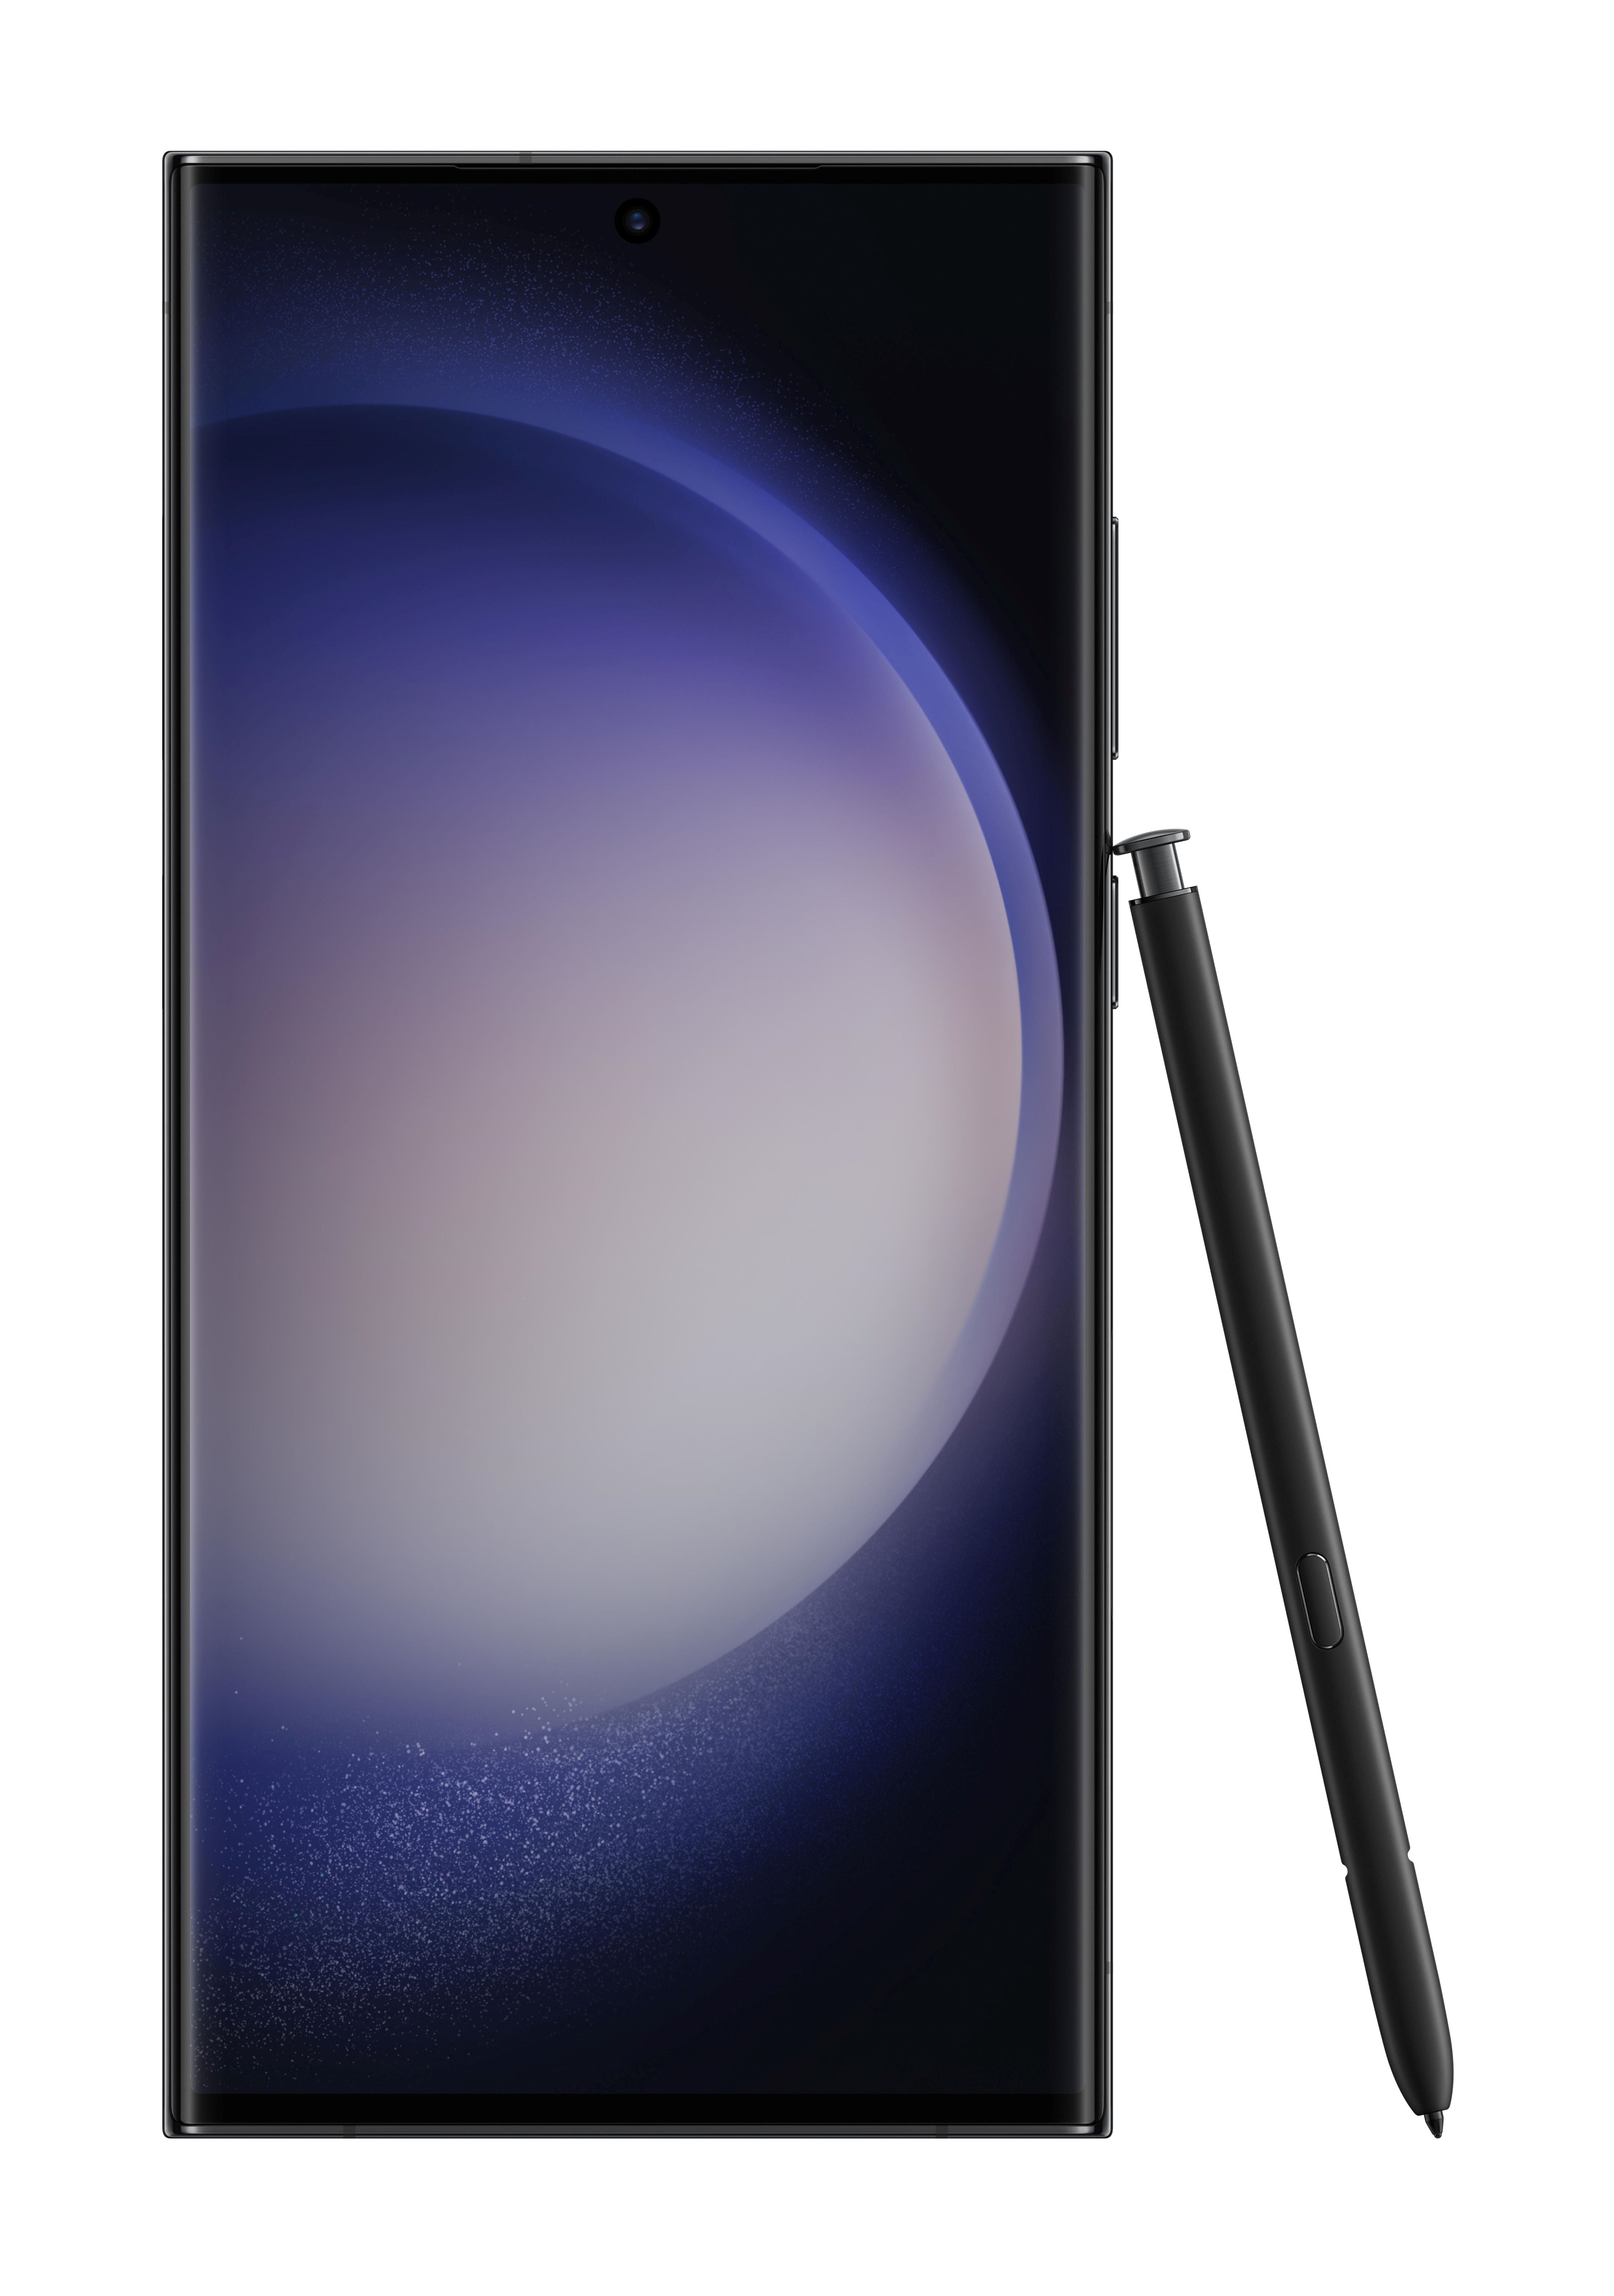 Samsung Galaxy S23 Ultra - 512 GB - Phantom Black (Unlocked) for